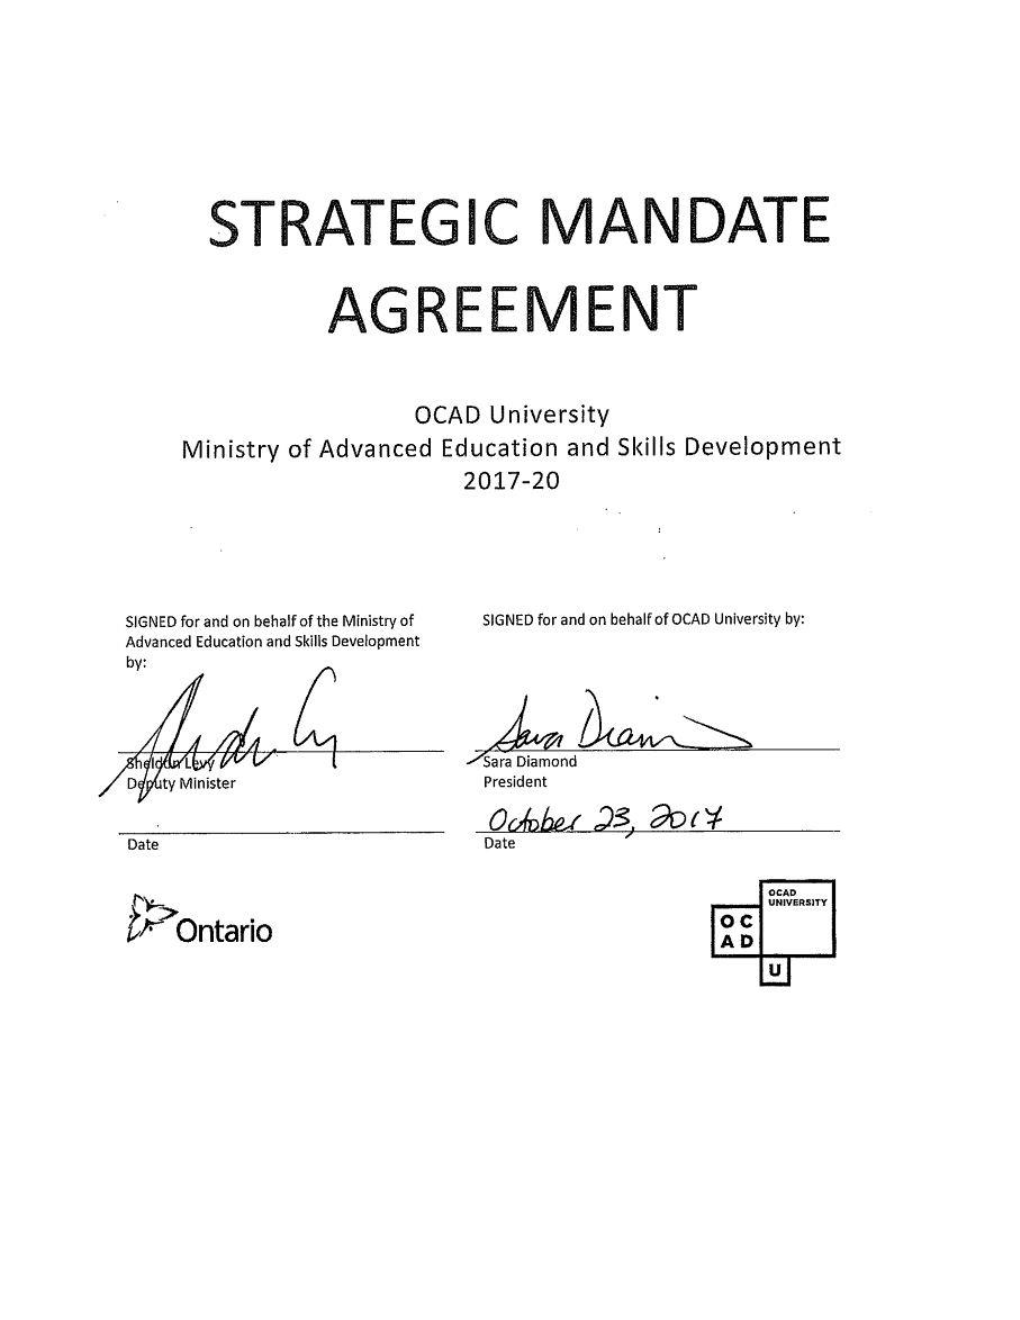 Strategic Mandate Agreement